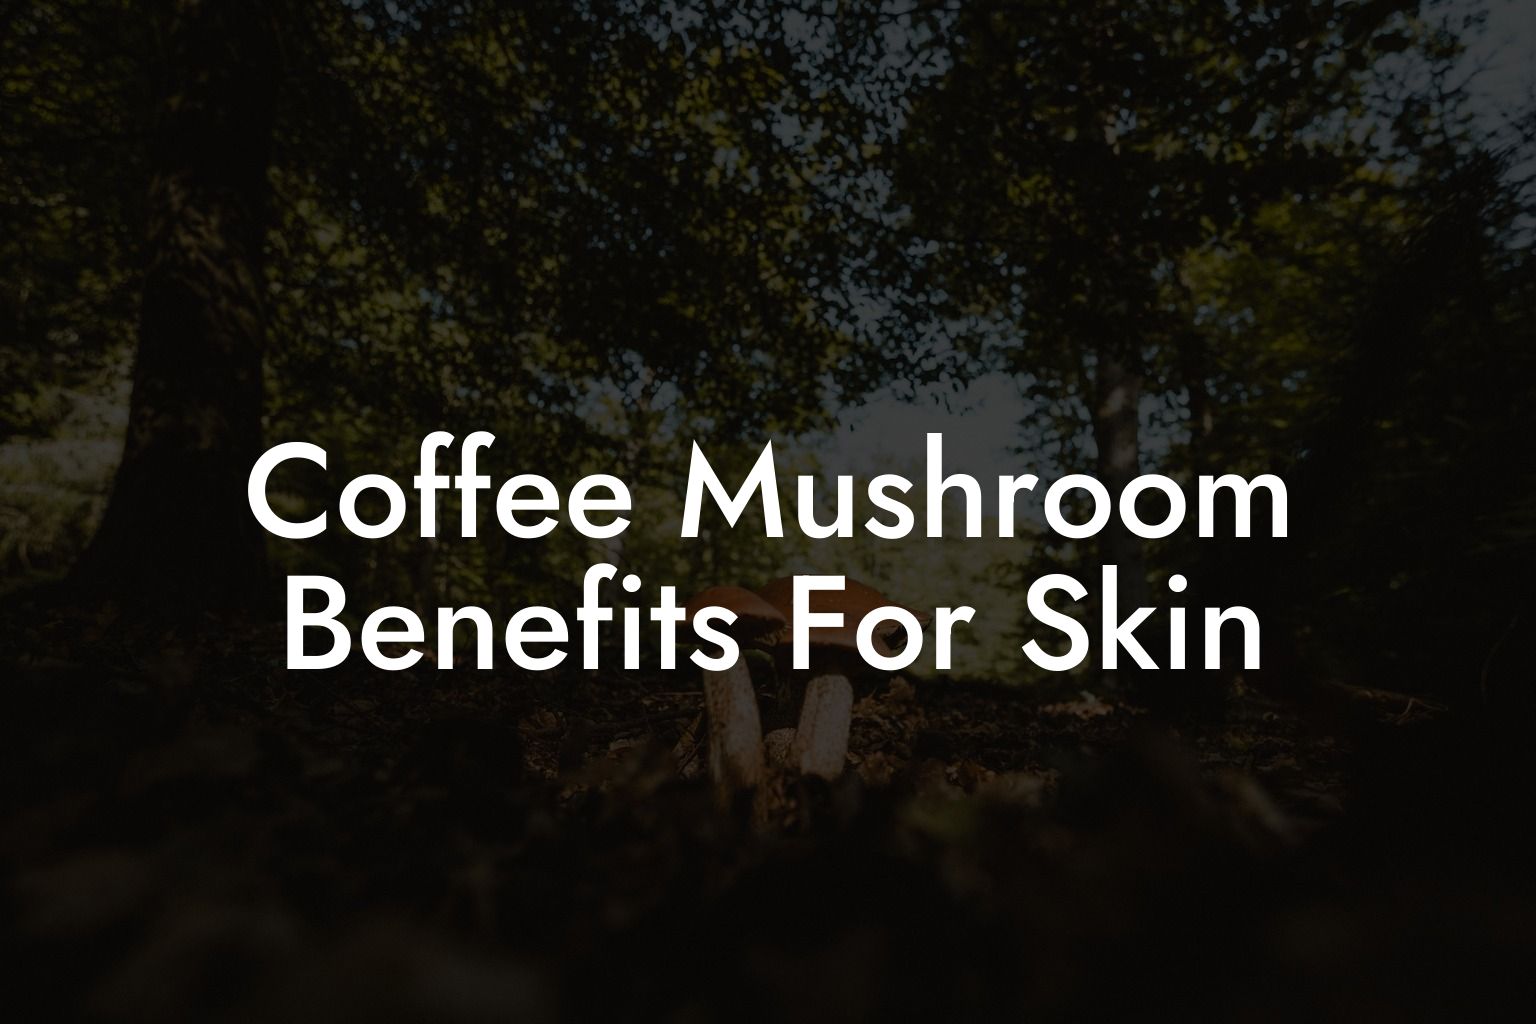 Coffee Mushroom Benefits For Skin